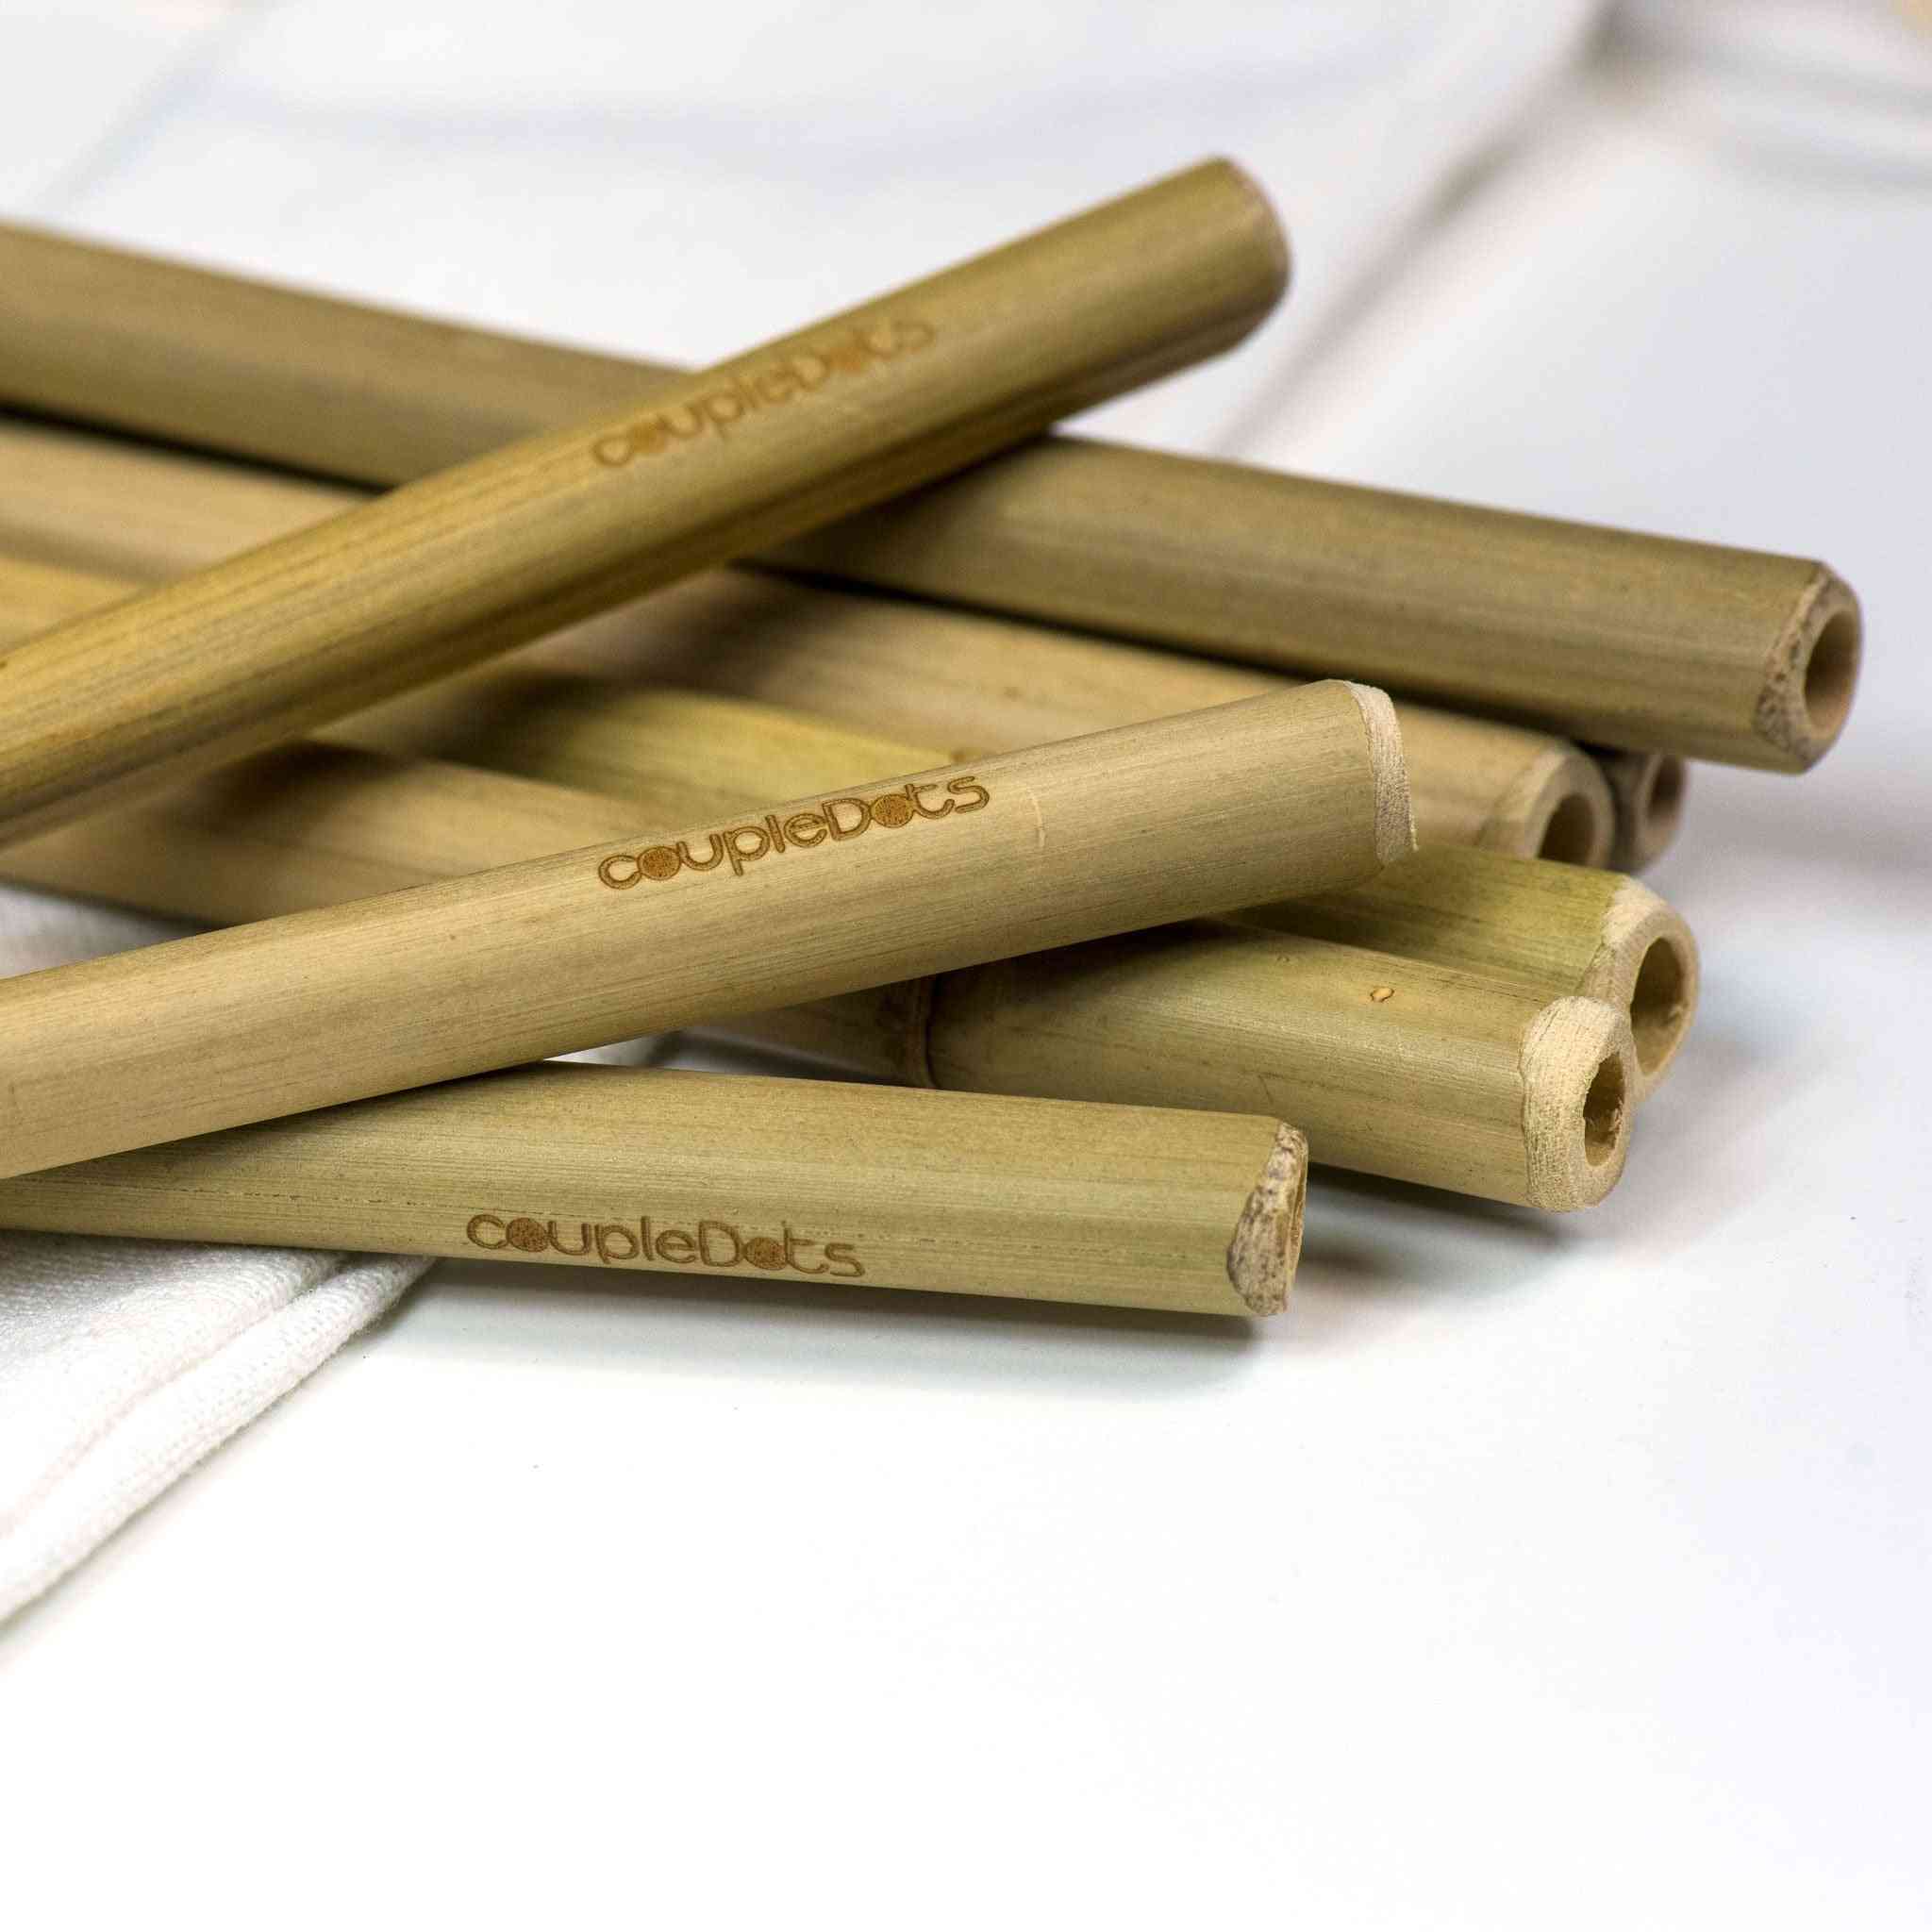 Biodegradable Bamboo Drinking Straws